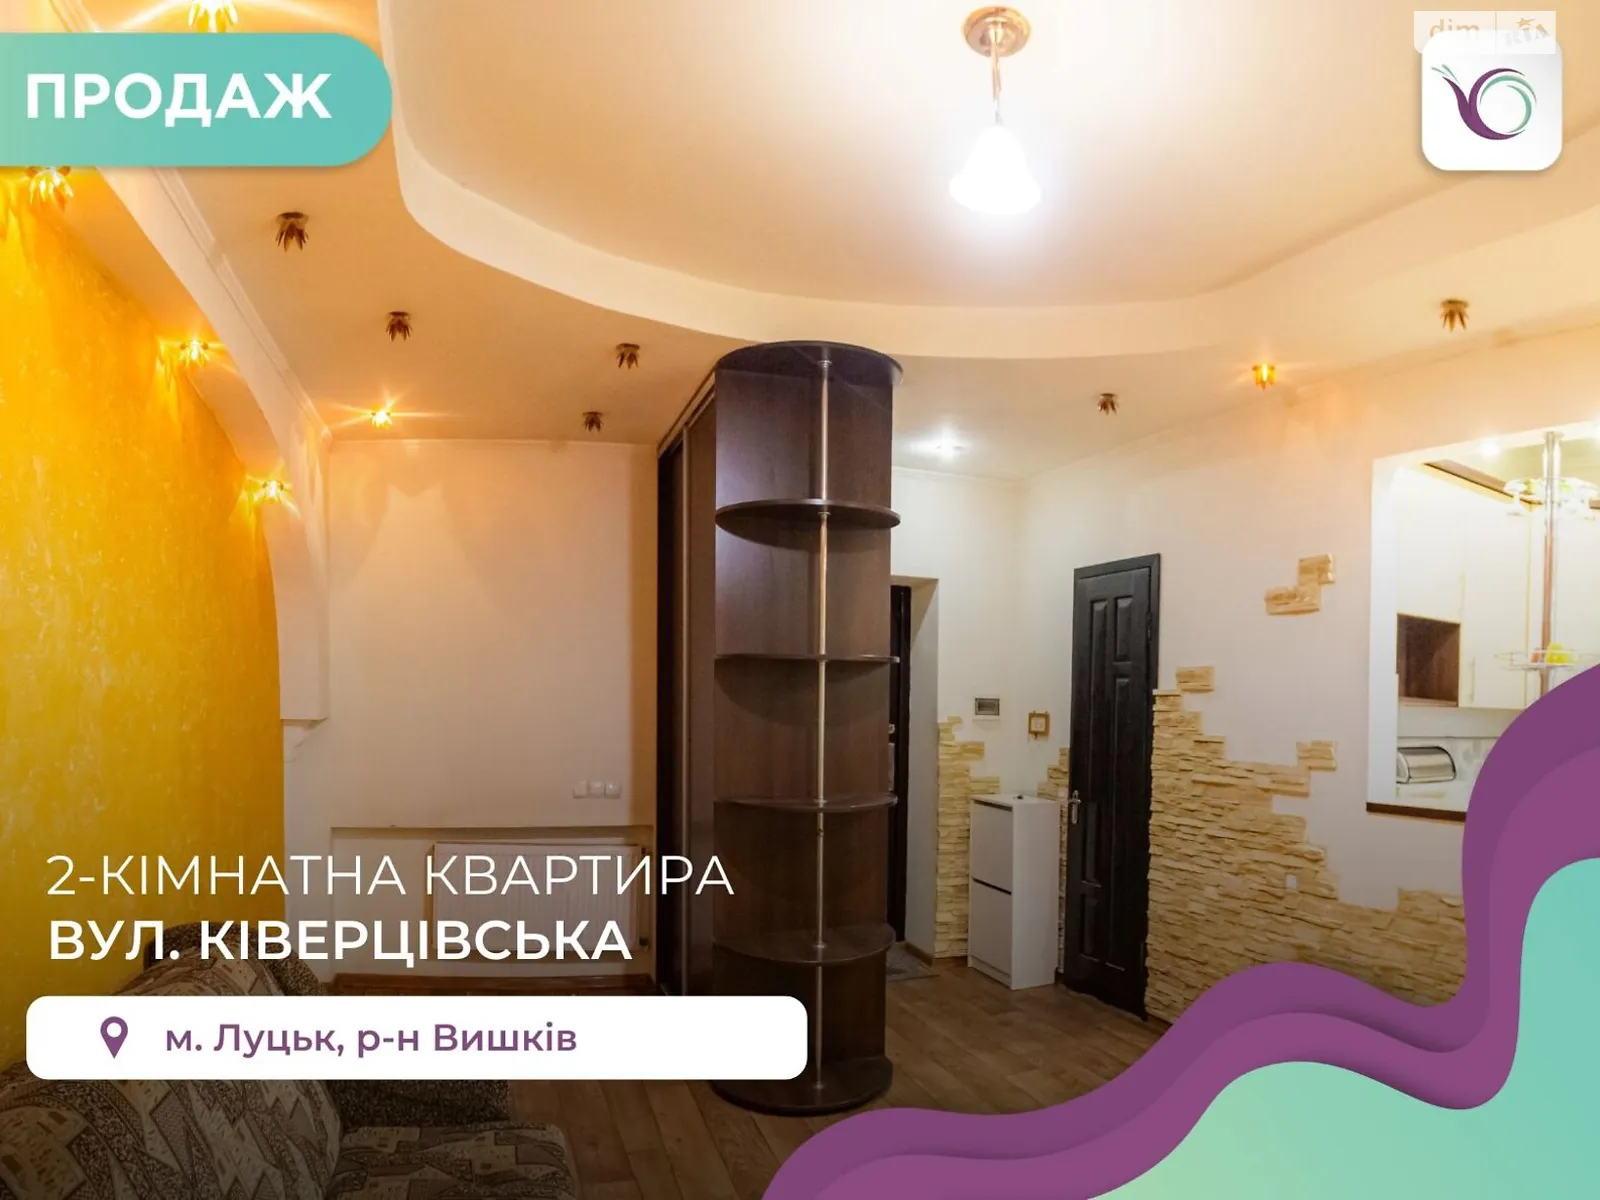 2-кімнатна квартира 40 кв. м у Луцьку, цена: 35000 $ - фото 1